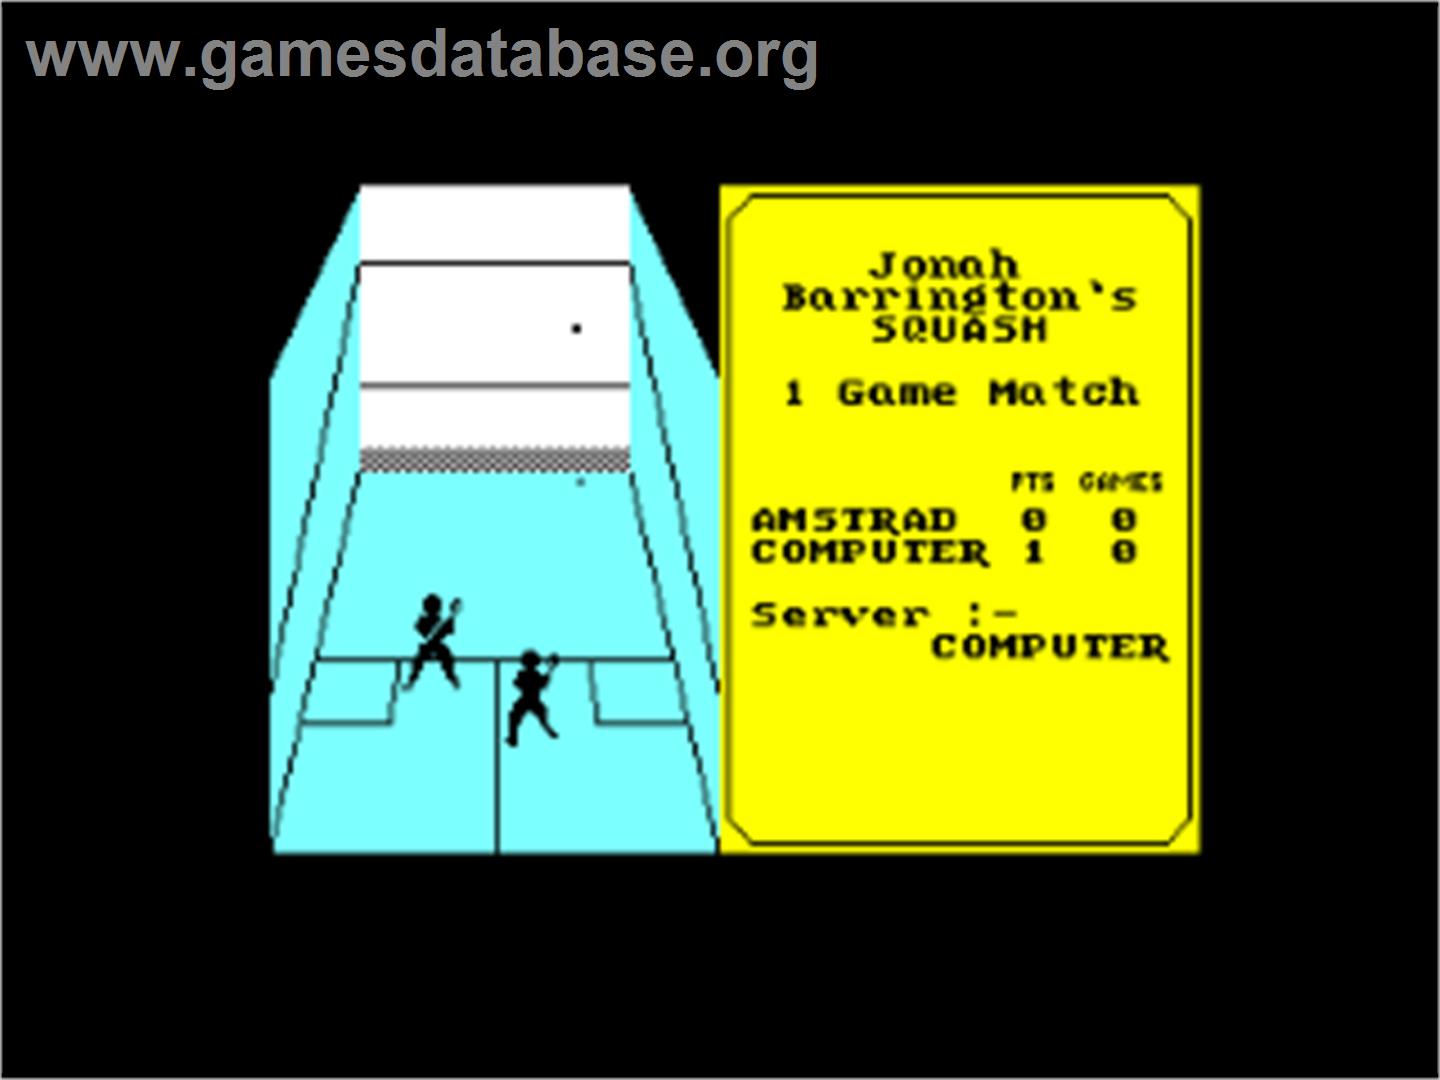 Jonah Barrington's Squash - Amstrad CPC - Artwork - In Game